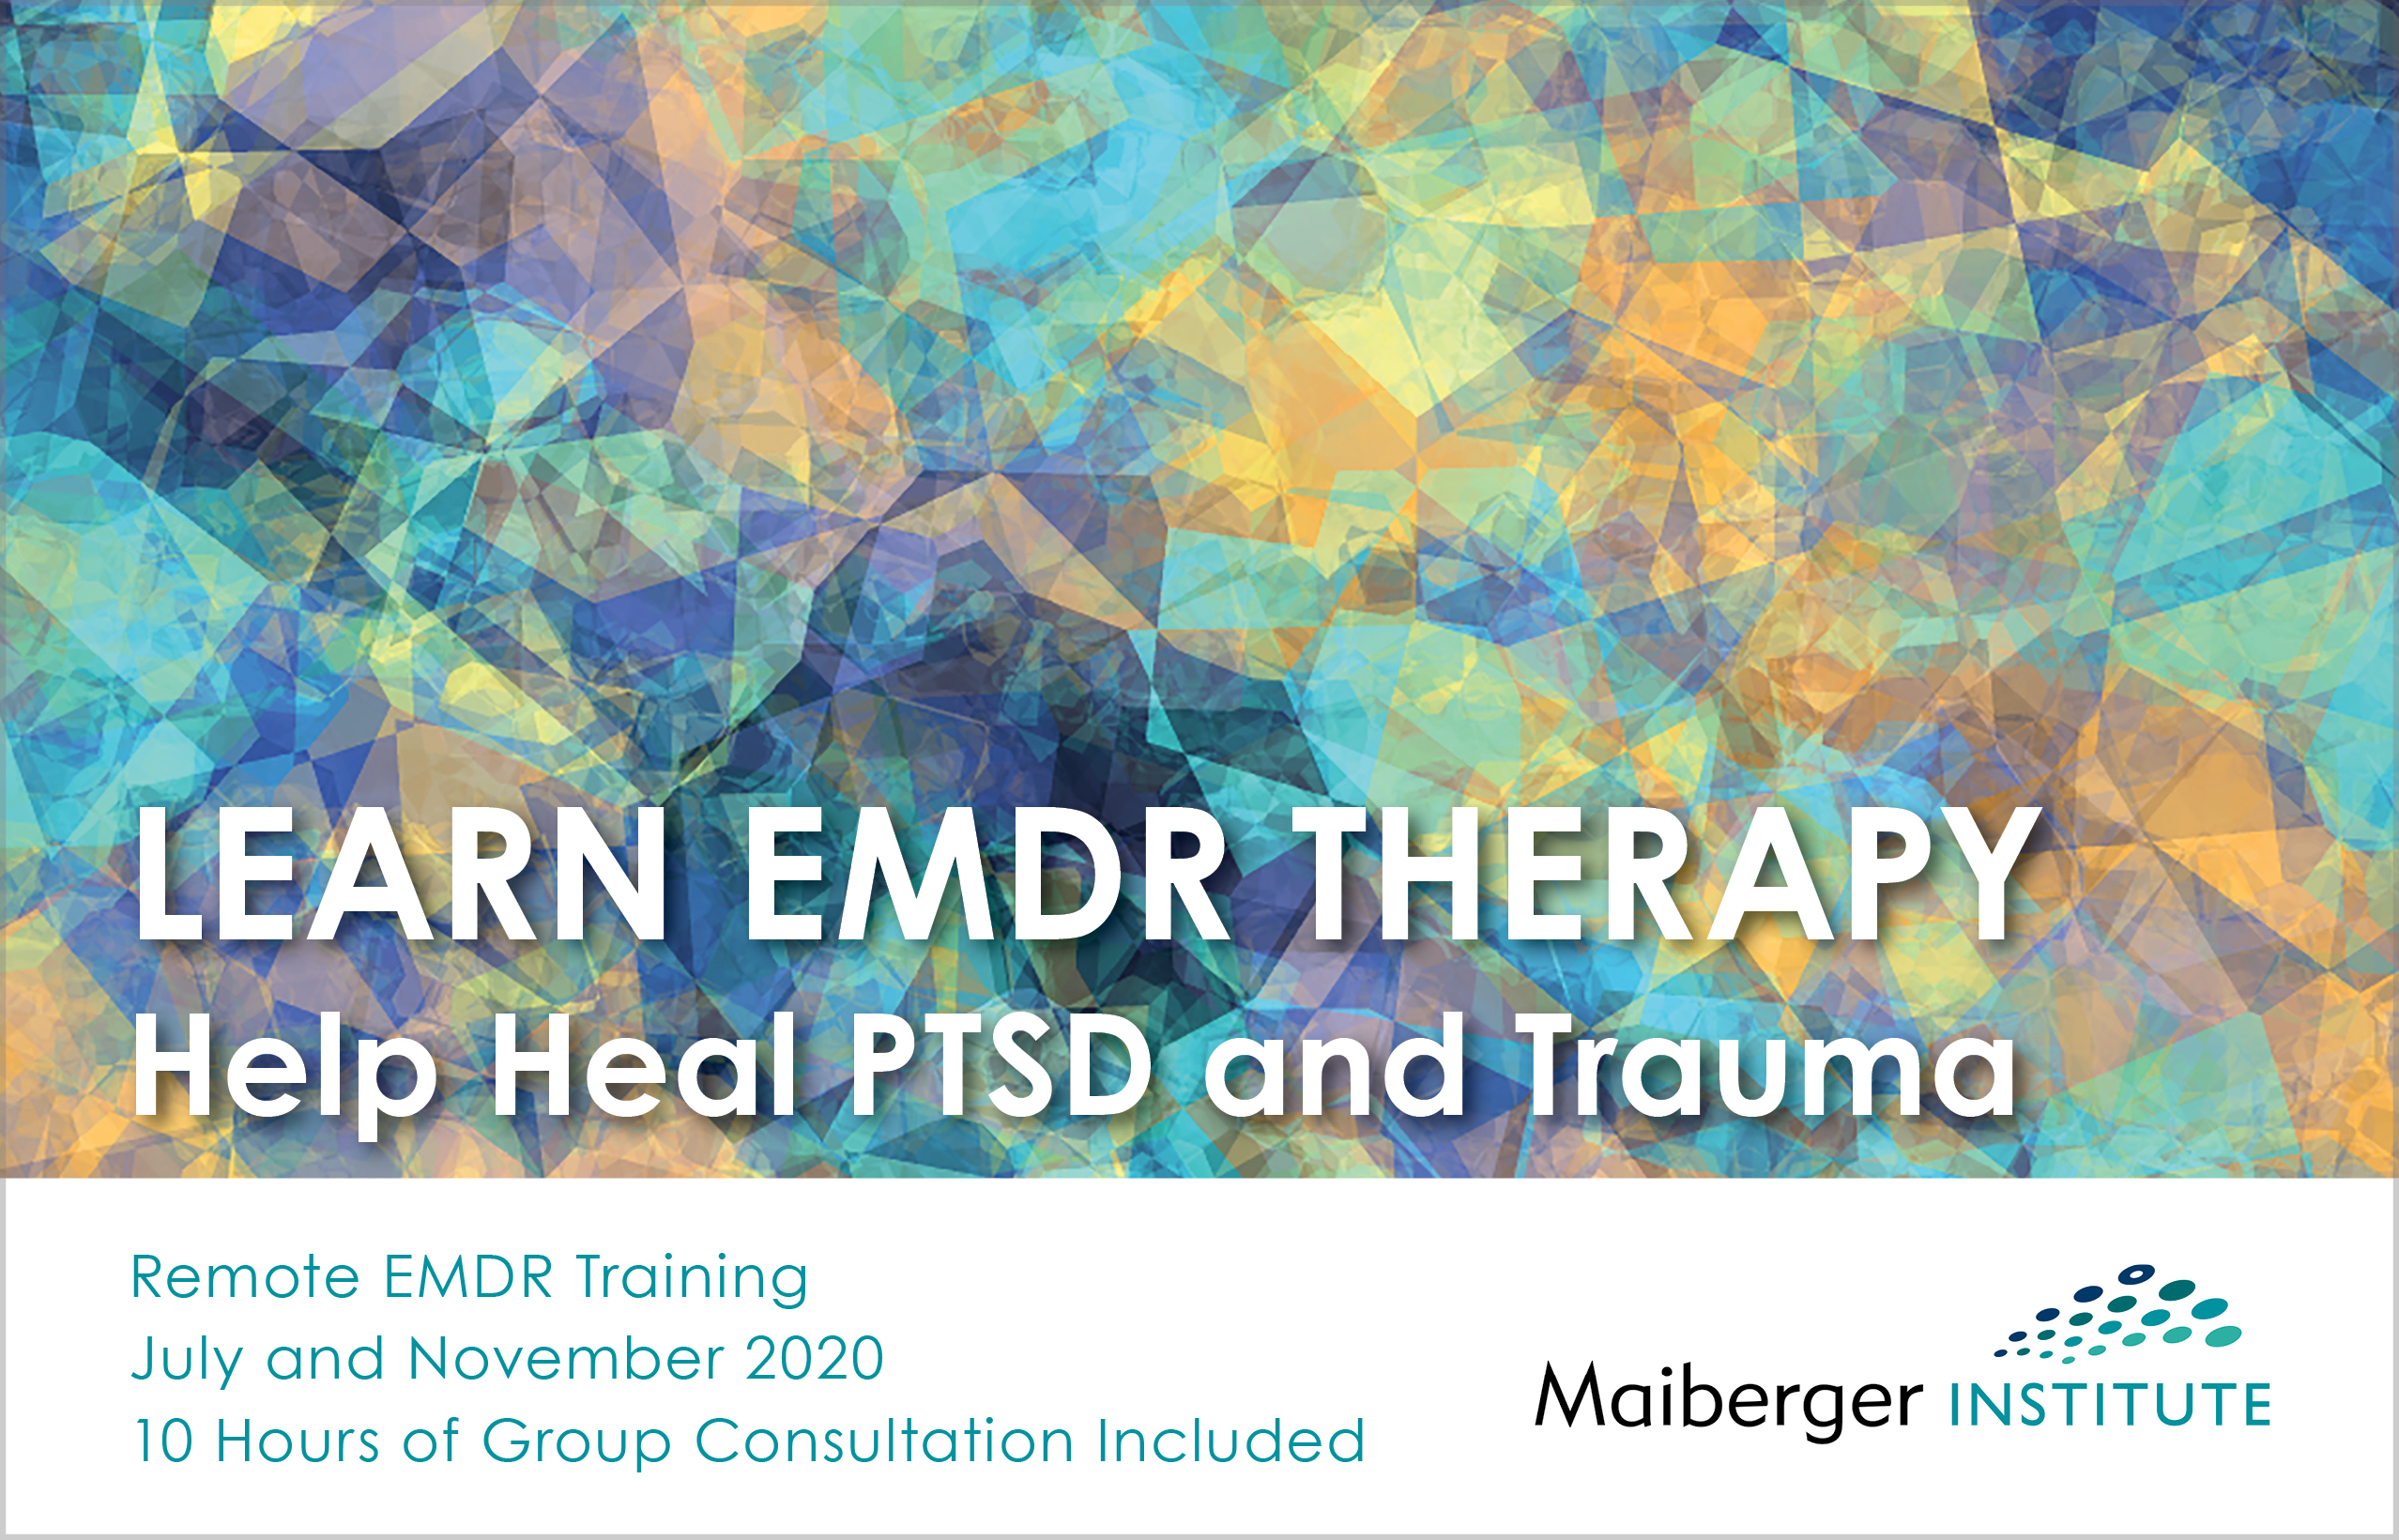 Remote EMDR Training - July and November 2020 - Maiberger Institute - EMDR Training Schedule